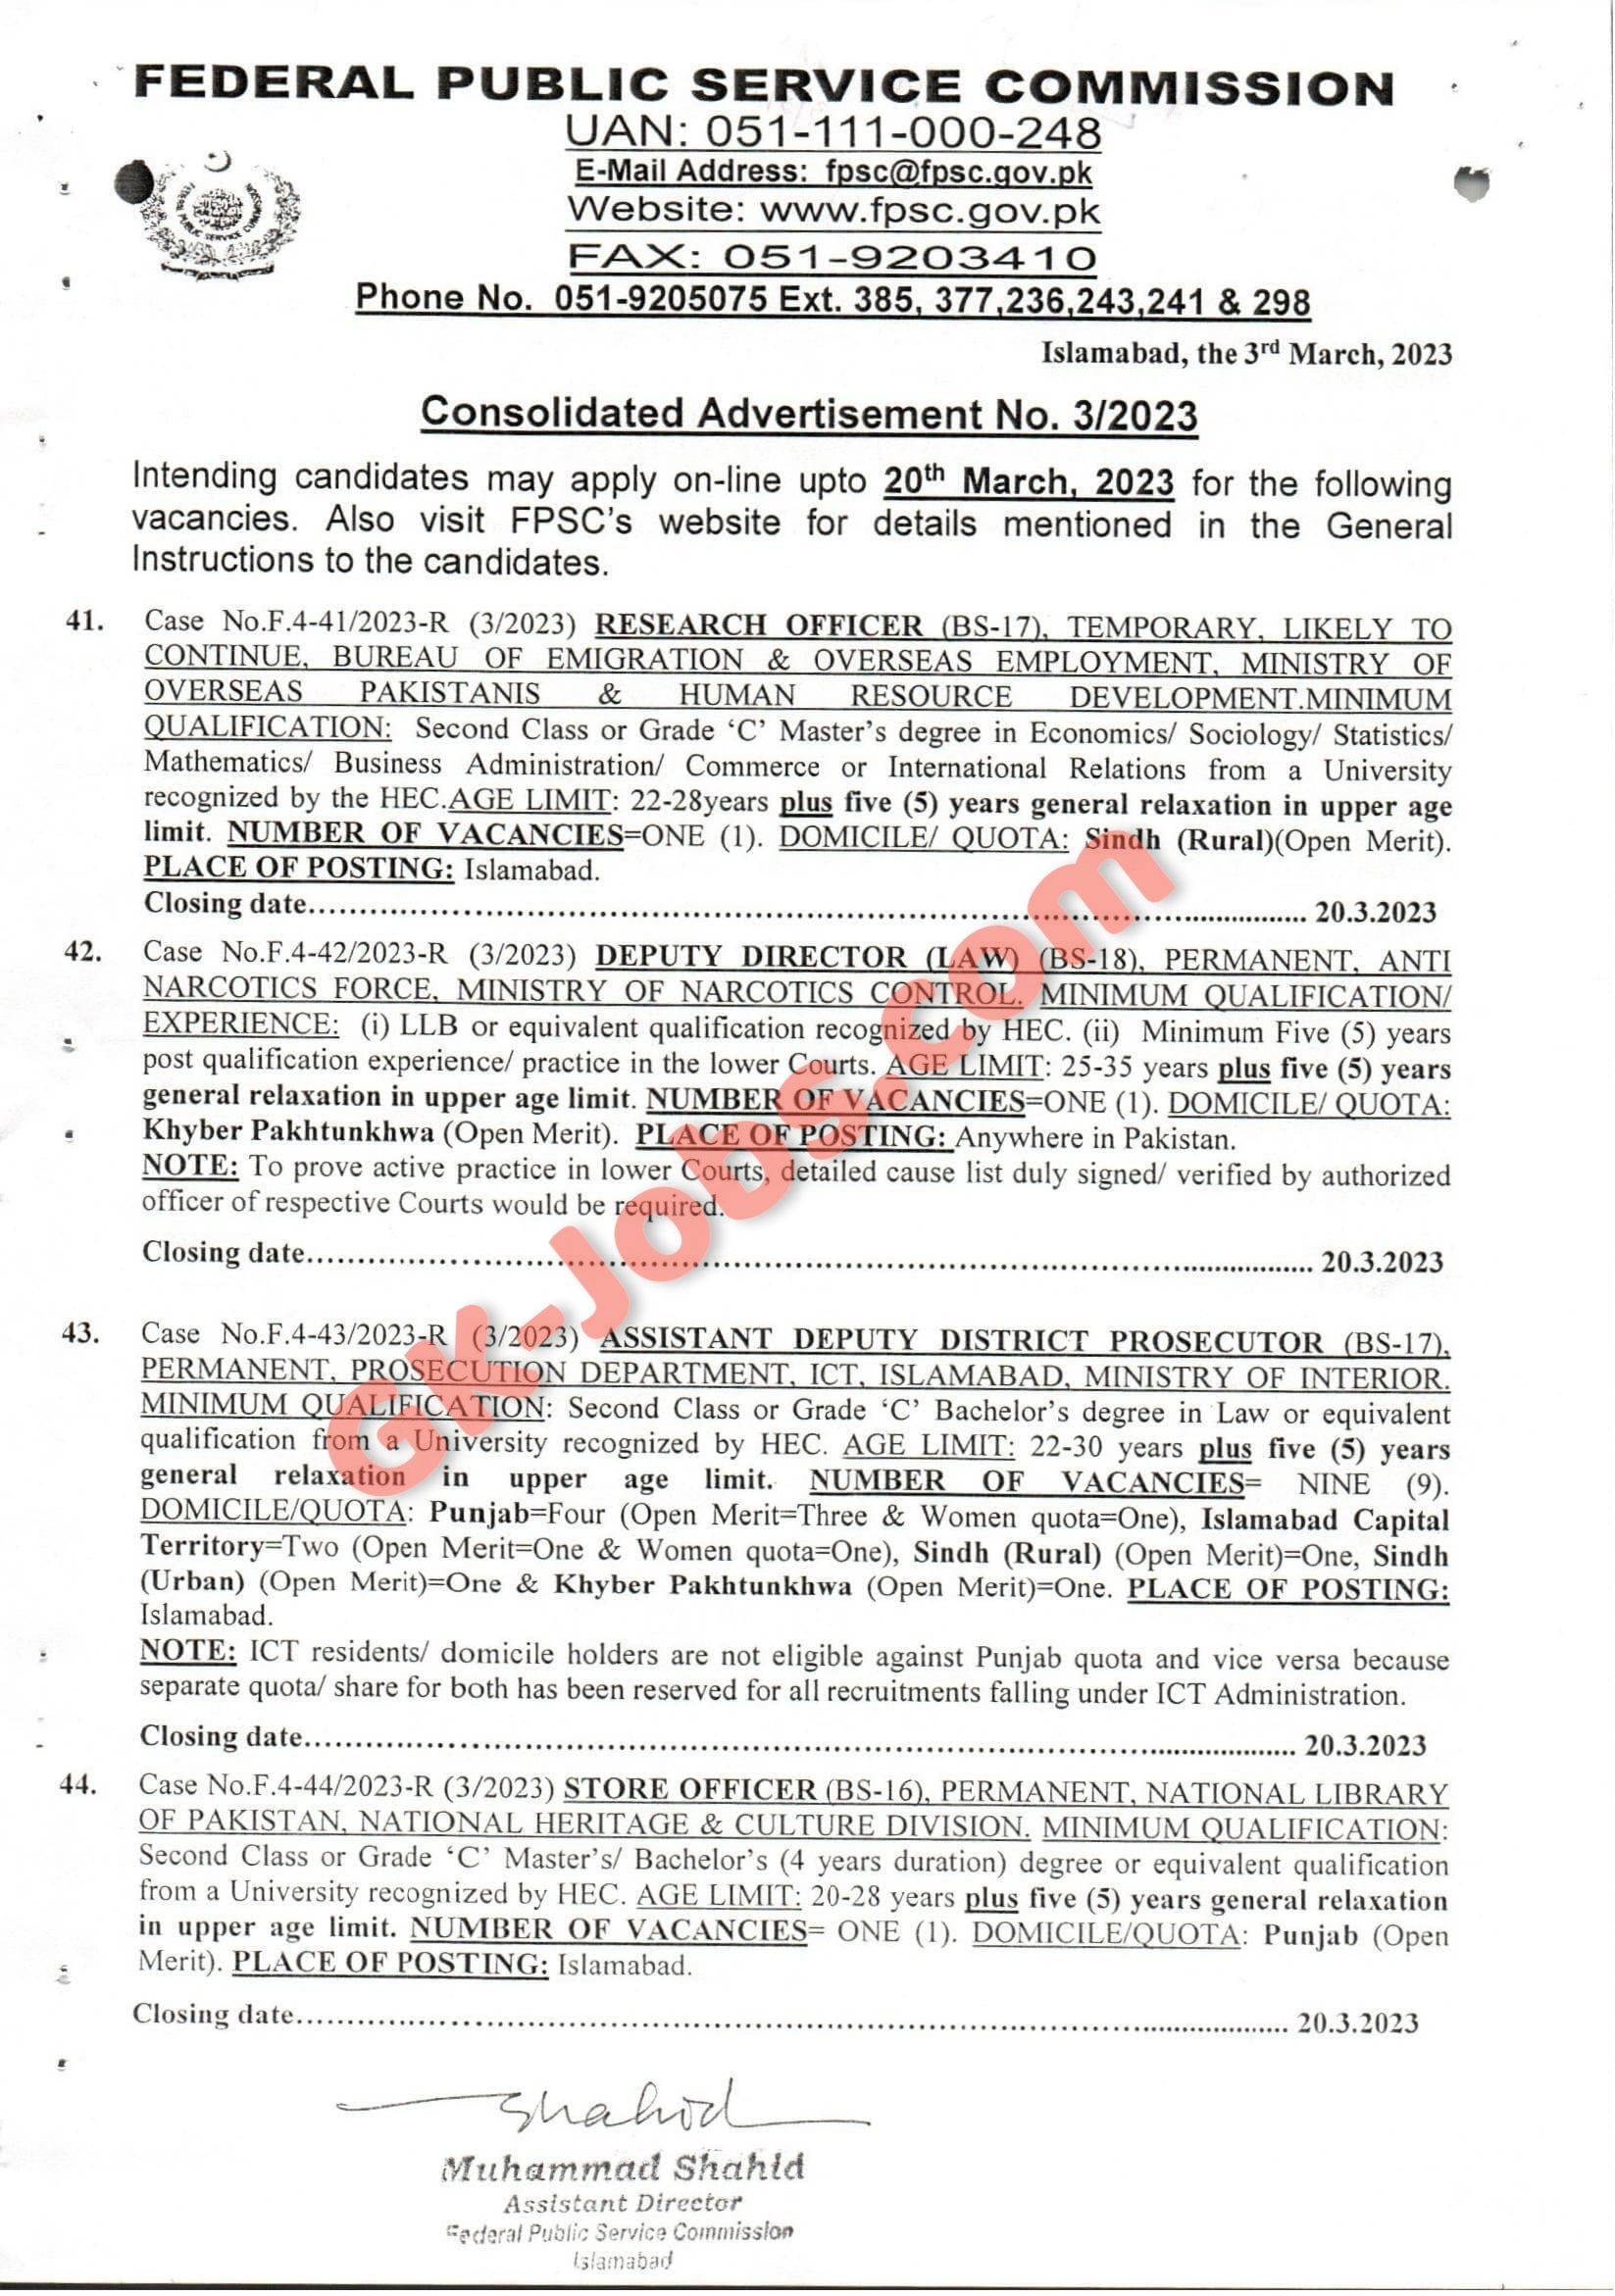 FPSC Jobs 2023 Consolidated Advertisement 03 2023 Online Applications via fps.gov.pk